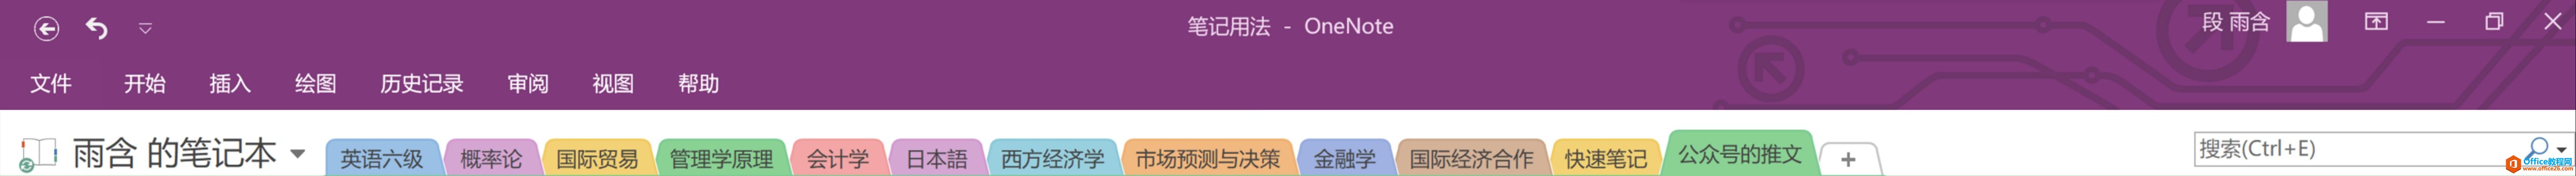 OneNote使用指南